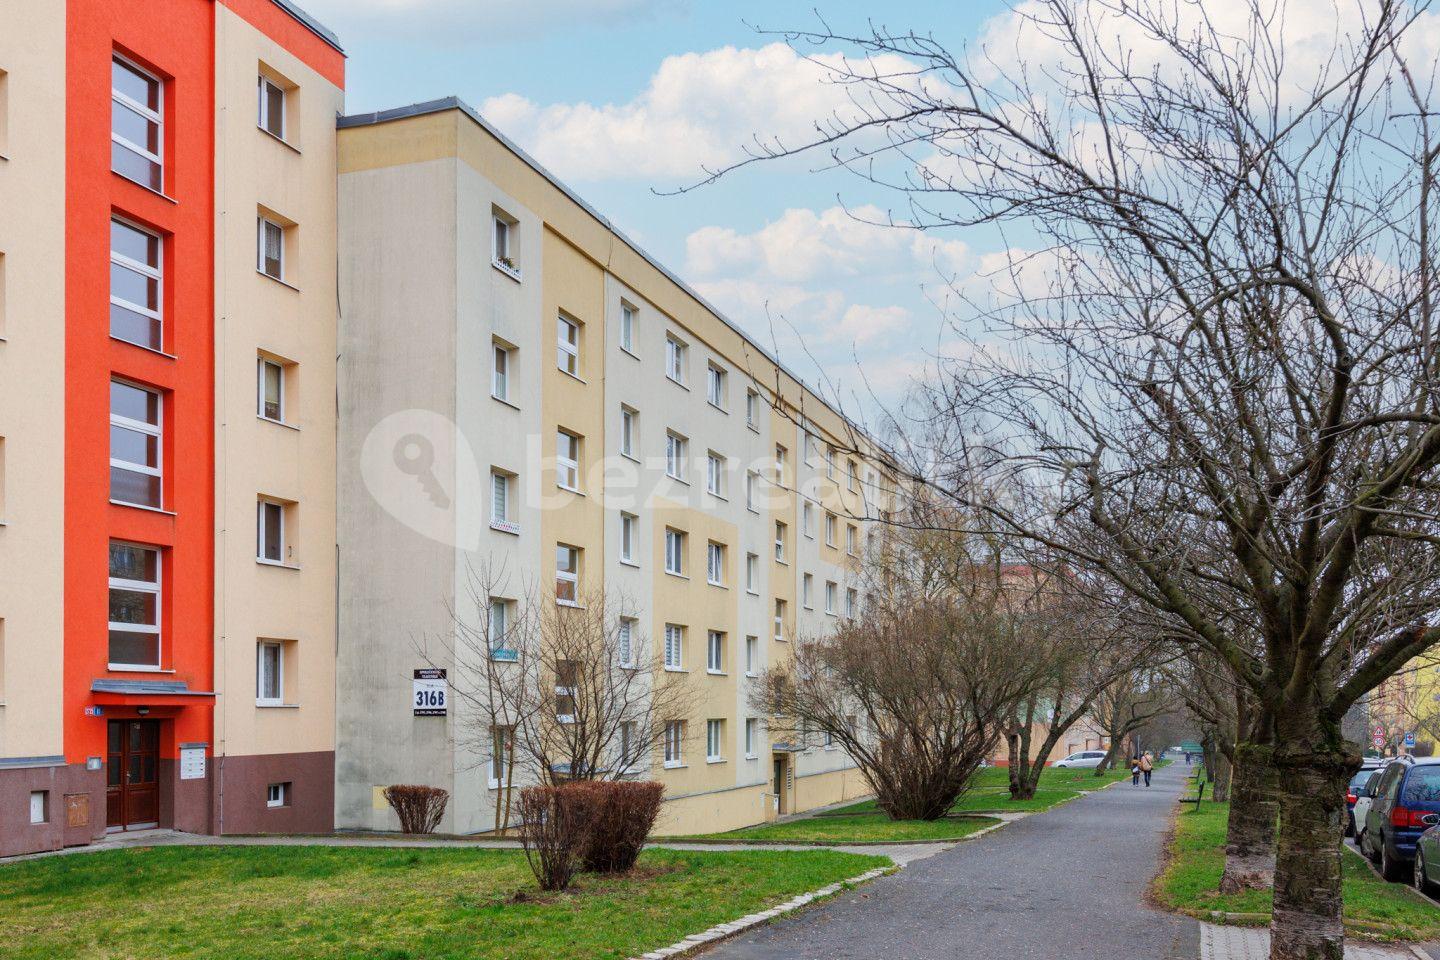 2 bedroom flat for sale, 64 m², Zdeňka Fibicha, Most, Ústecký Region